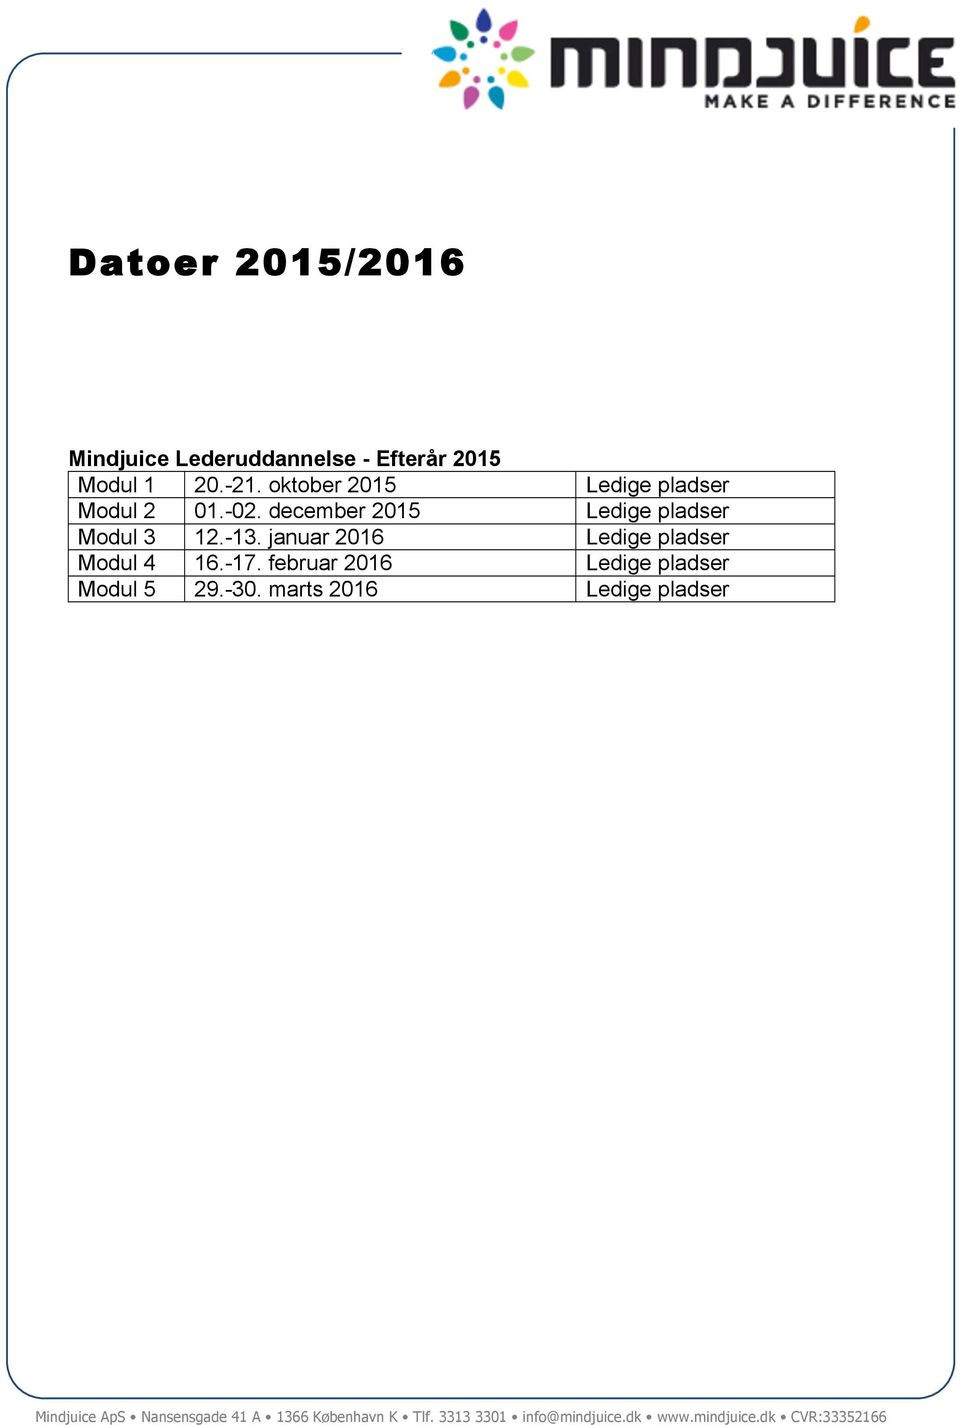 december 2015 Ledige pladser Modul 3 12.-13.